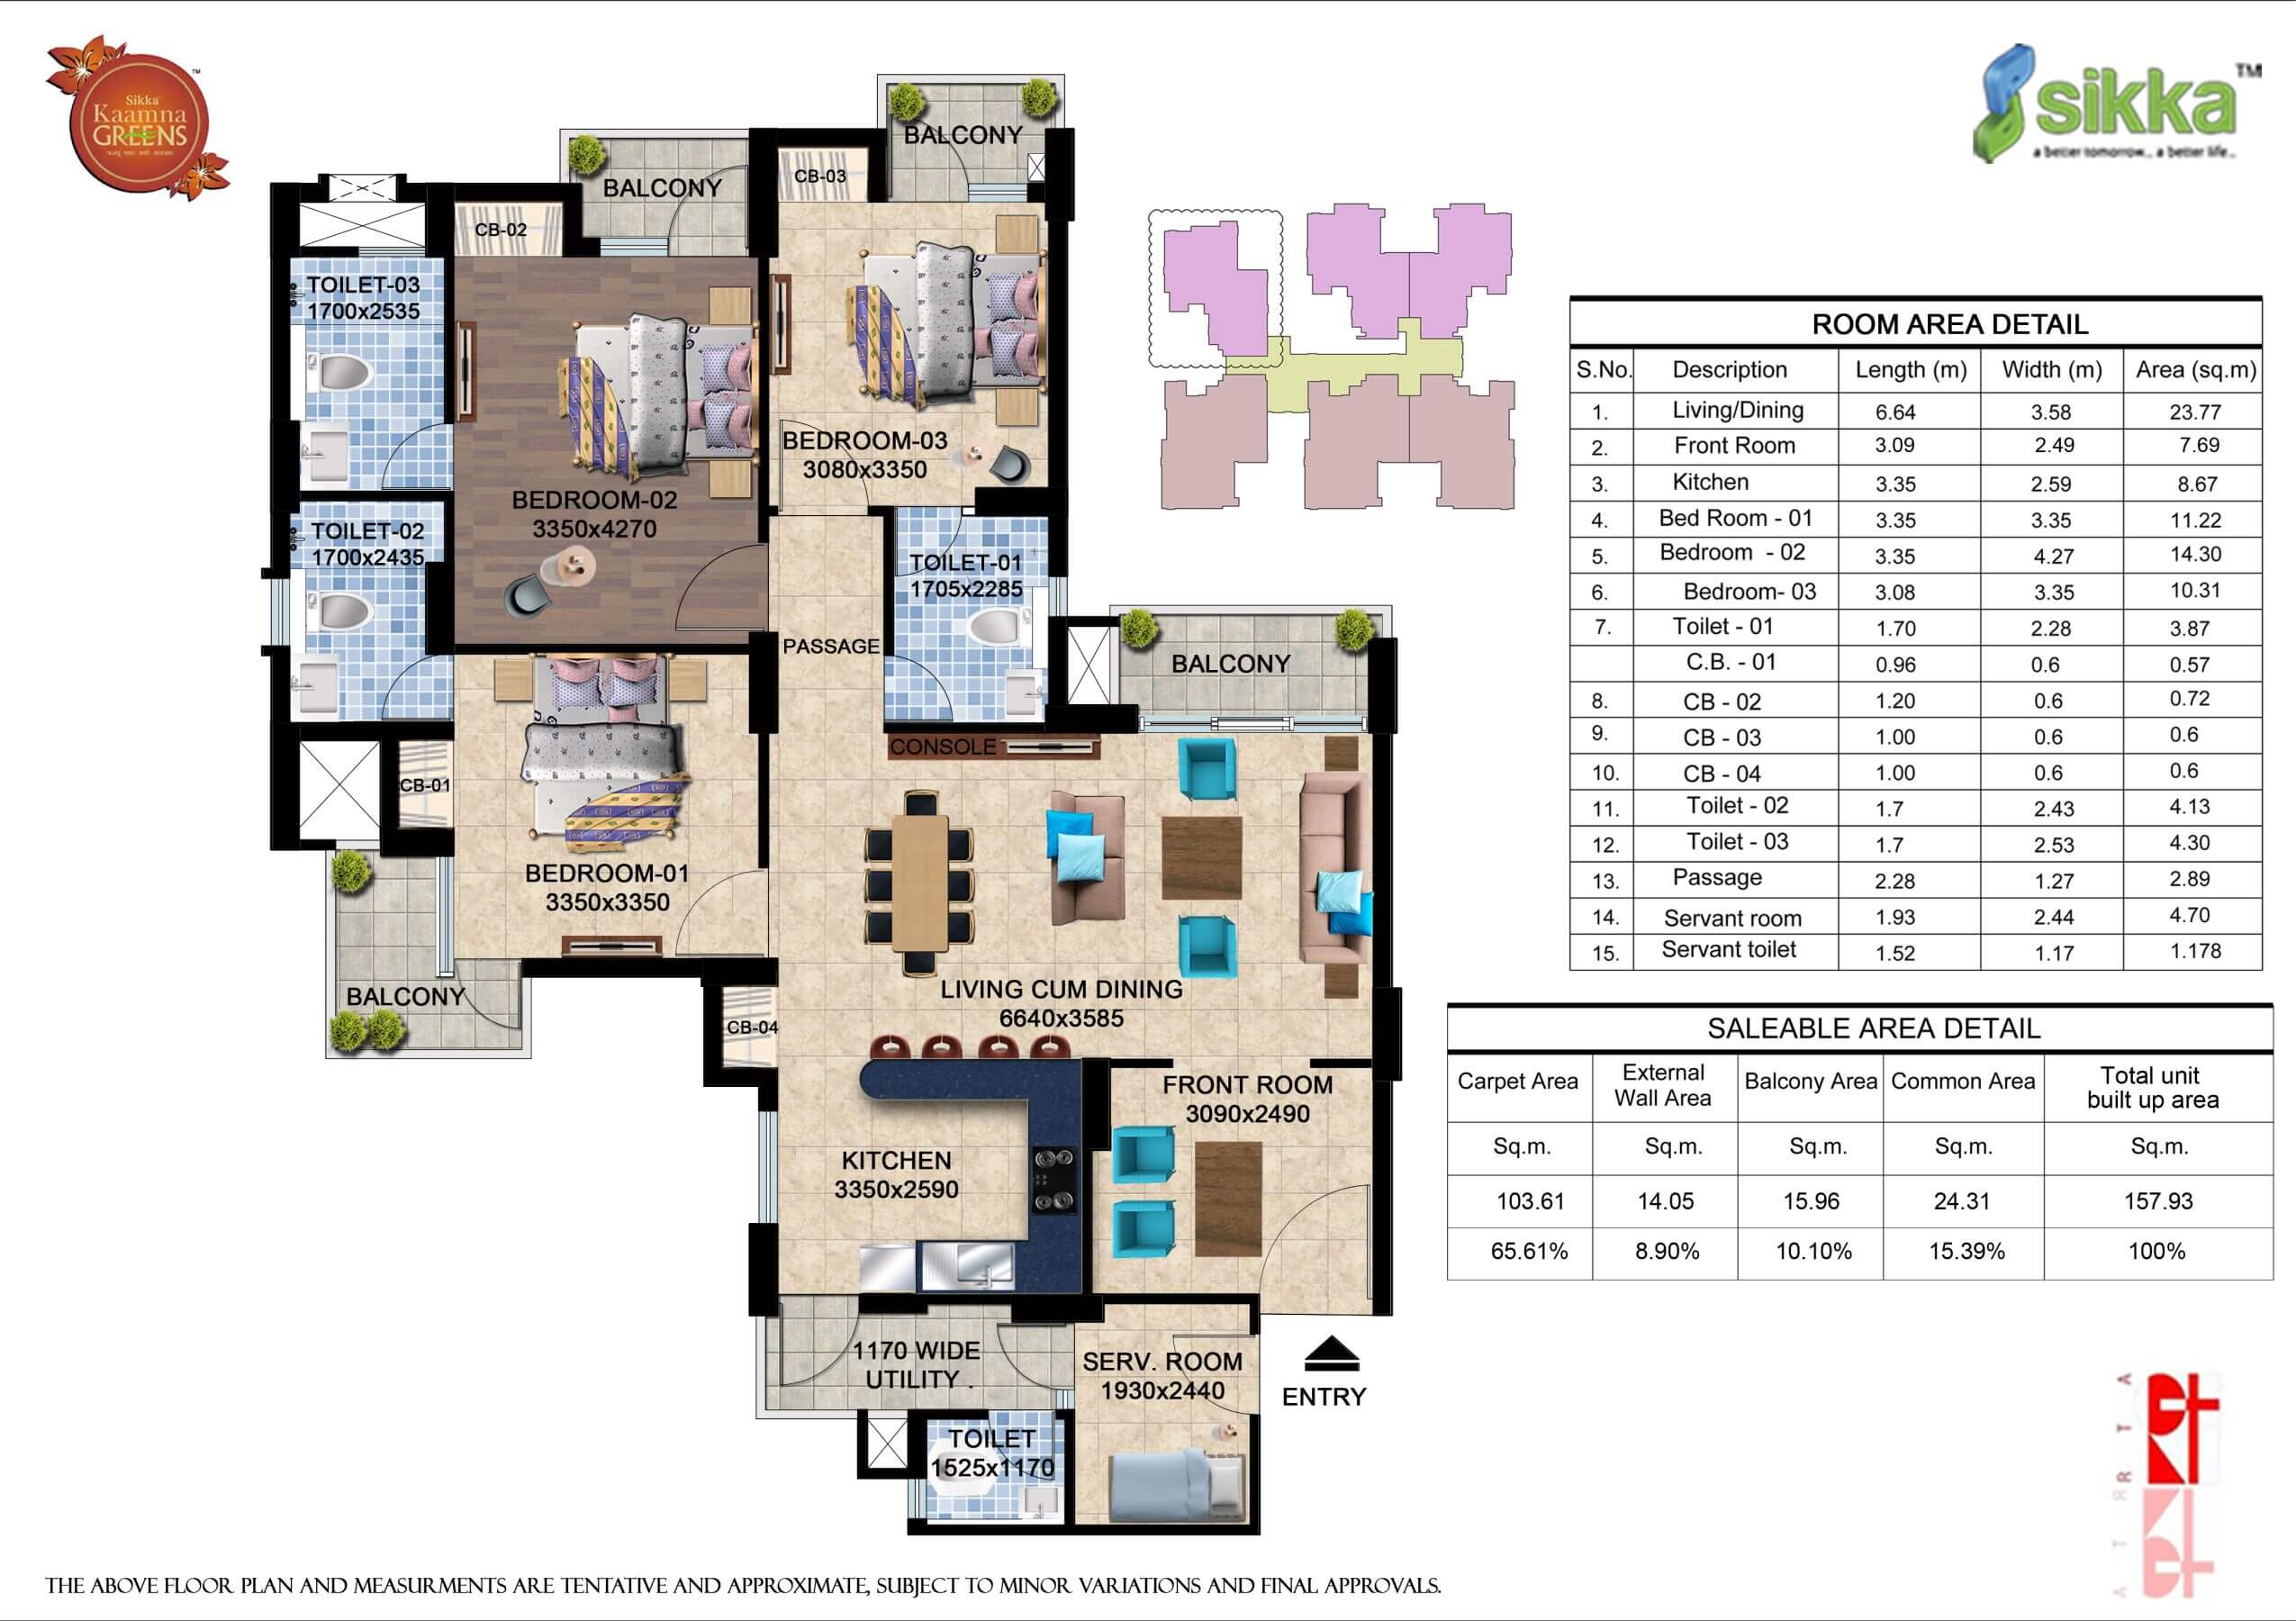 Kaamna Greens 4BHK Floor Plan - Area : 158.0 Sq.m